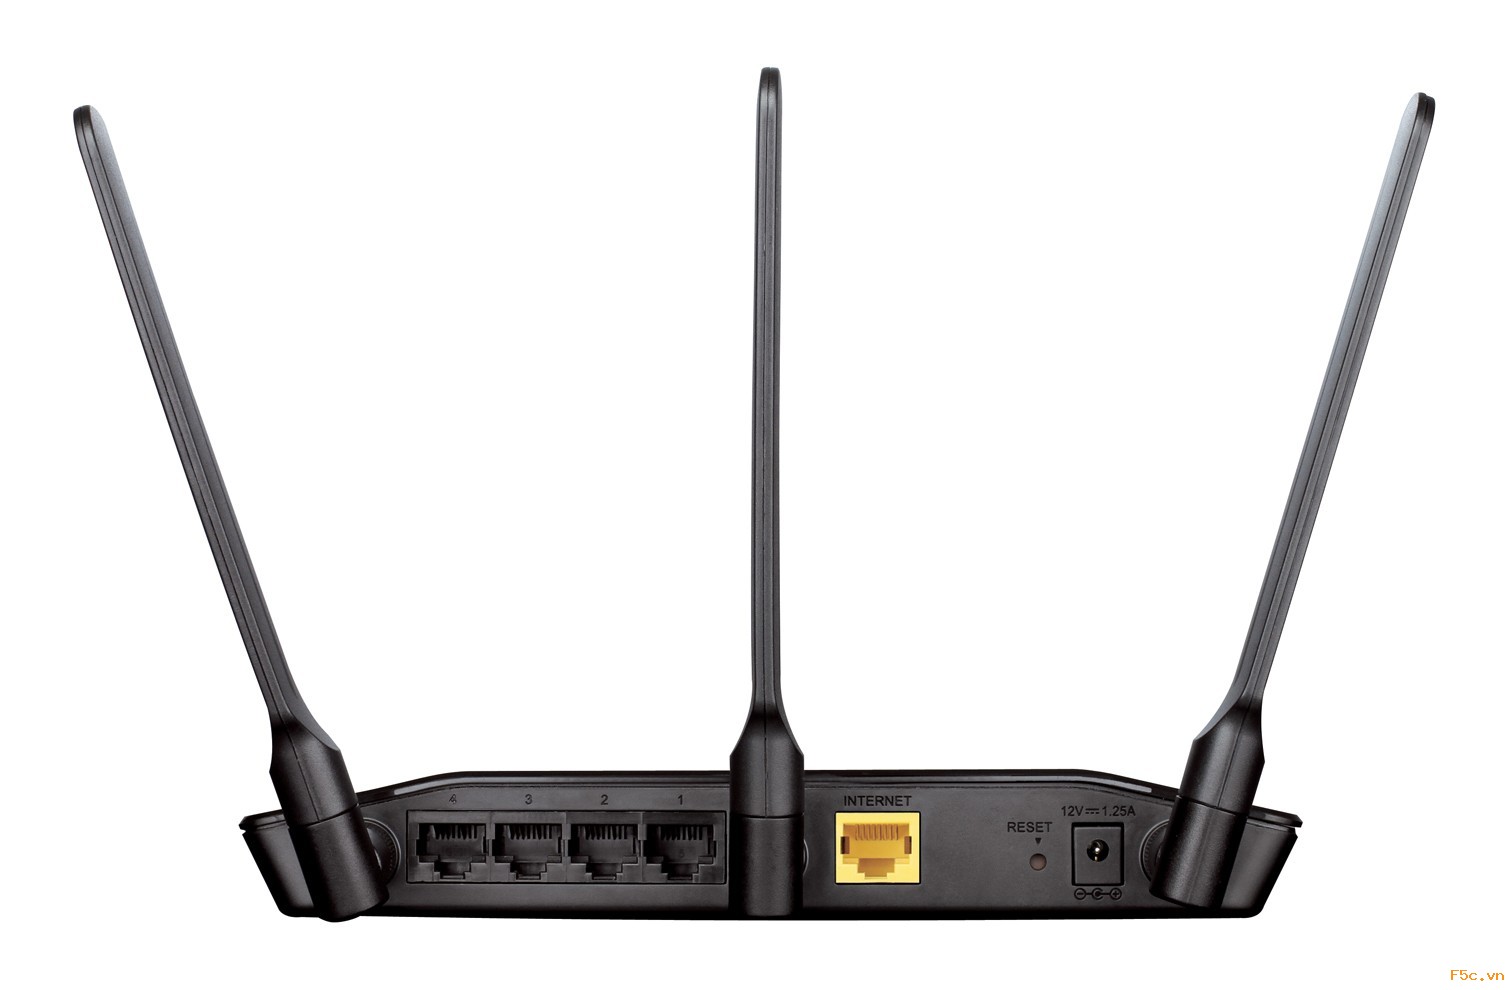 Bộ định tuyến D-Link DIR-619L - Wireless N300 Cloud Router